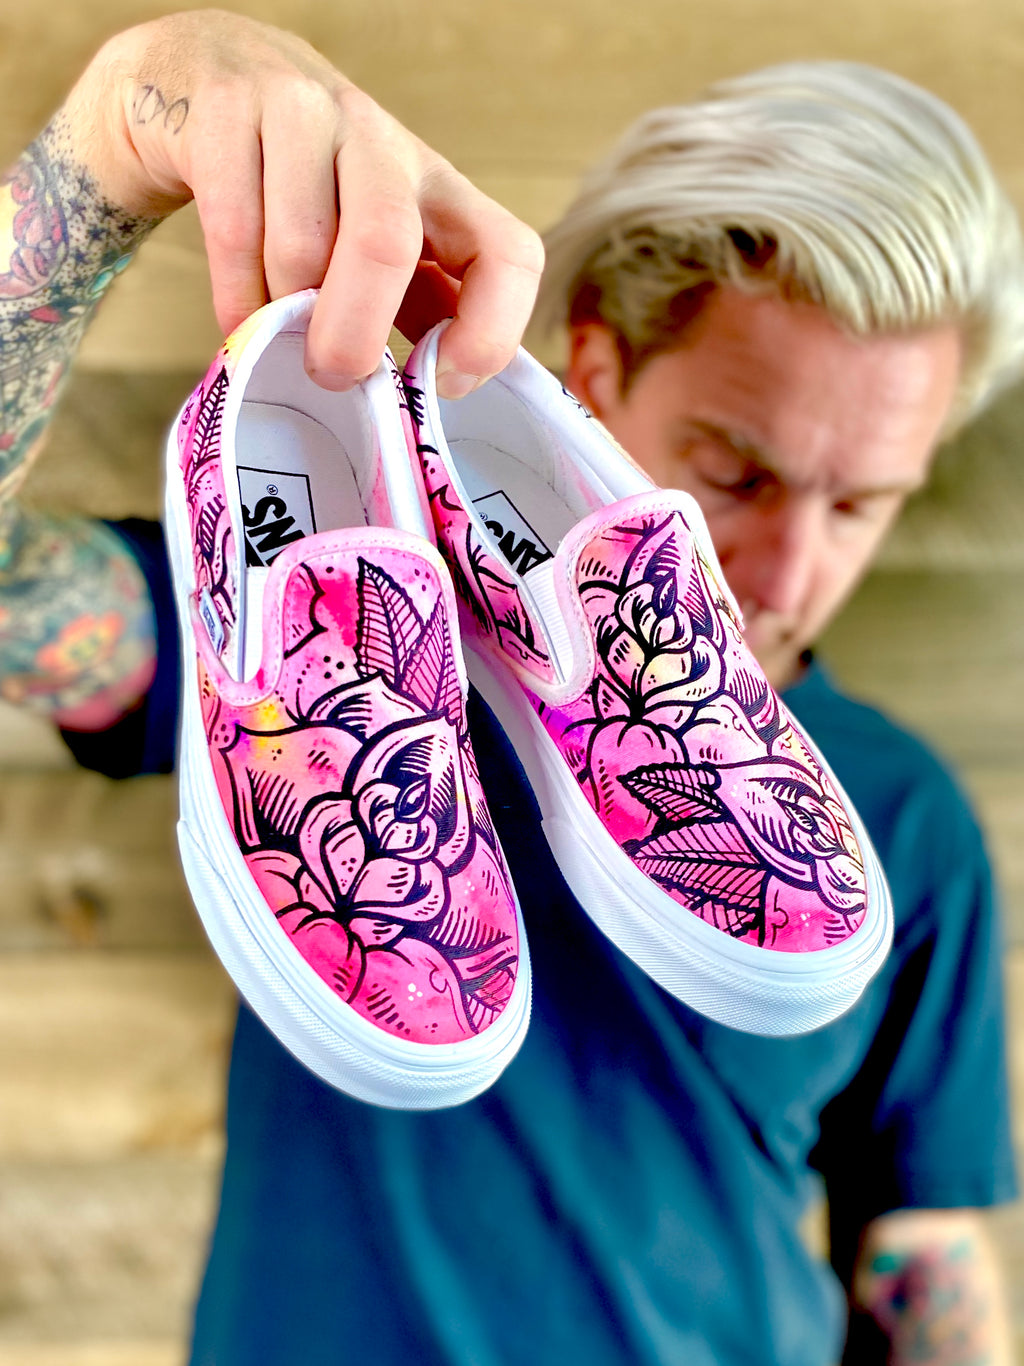 Blush Rose Vans Slip On shoes